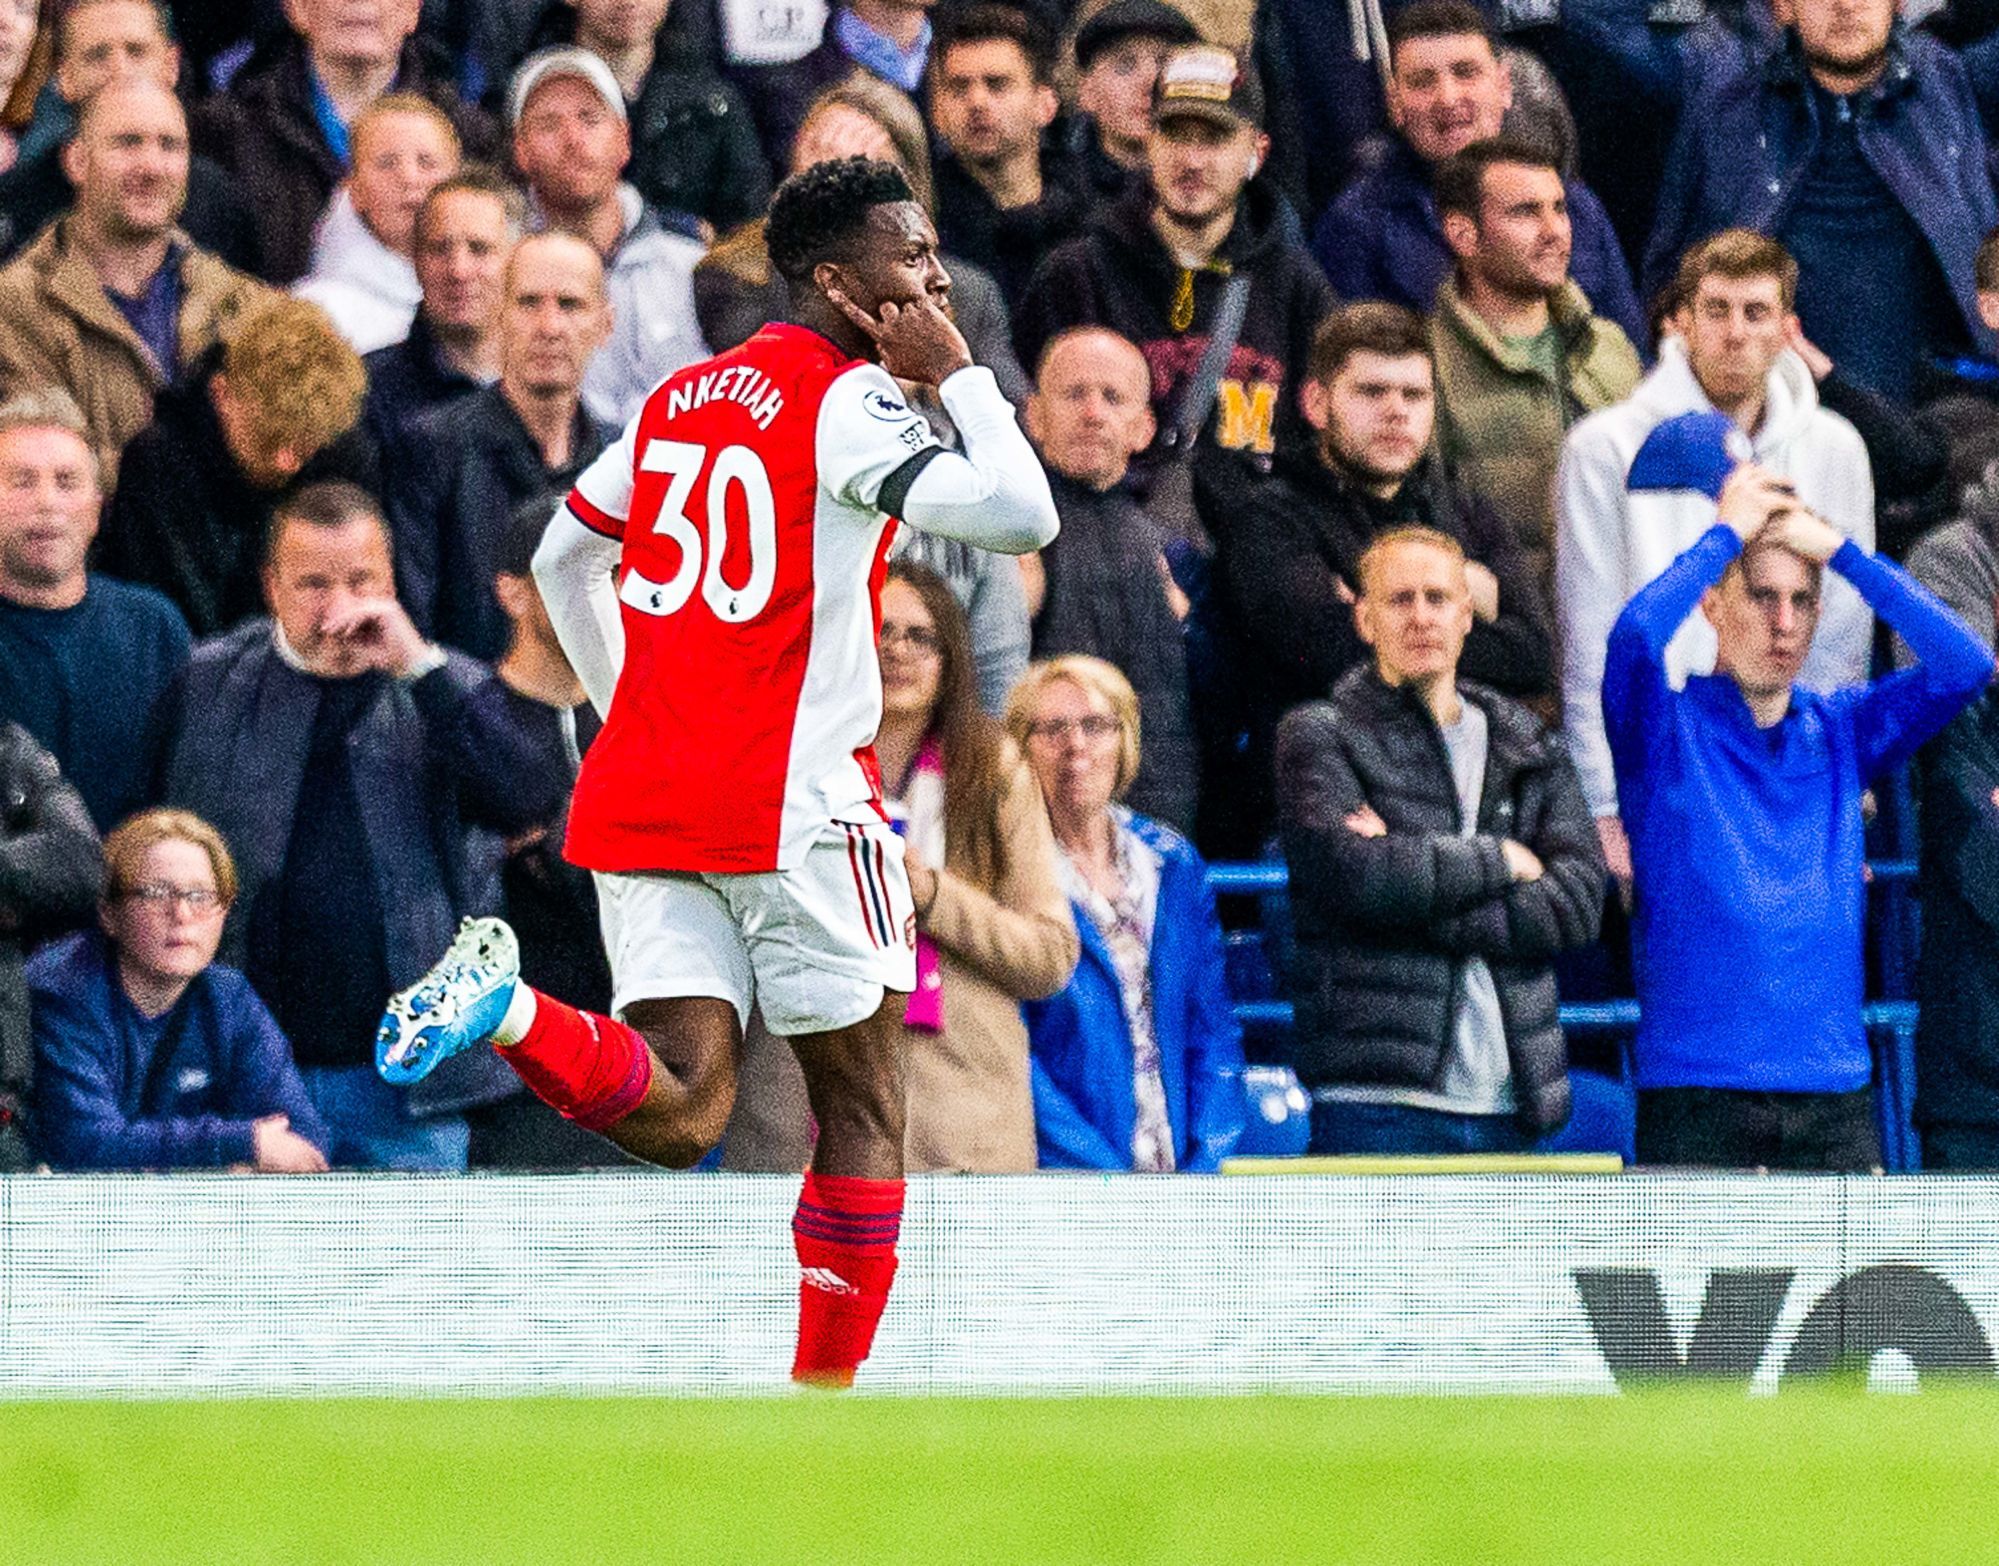 Eddie Nkeitia, Arsenal's top scorer in the Premier League